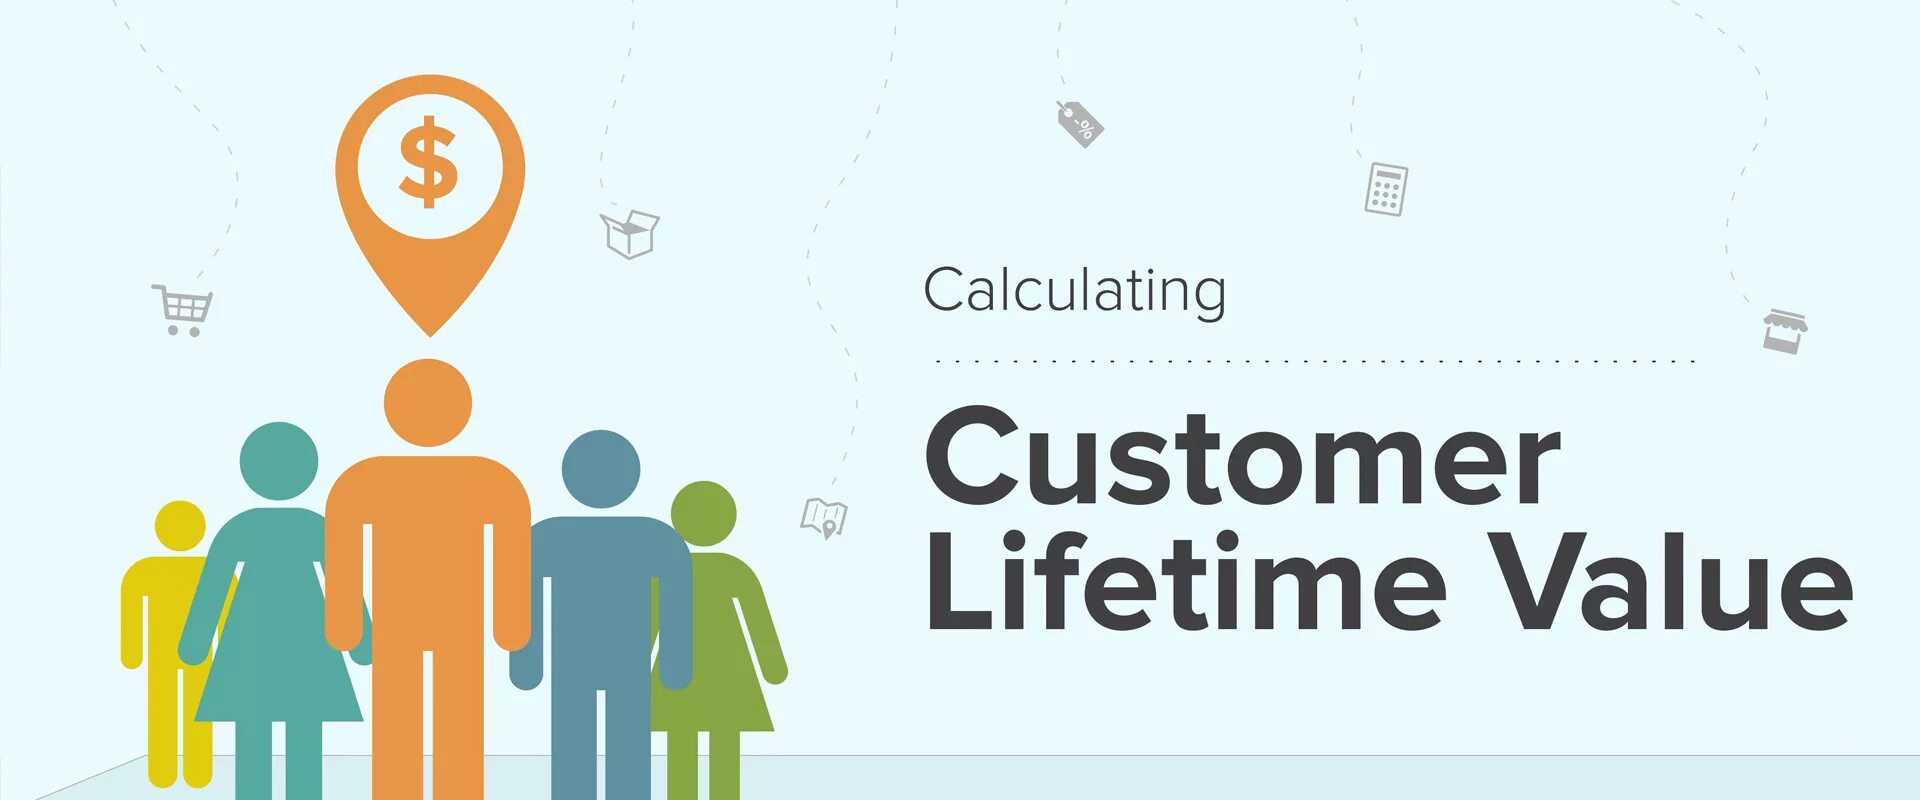 Live value. Customer Lifetime value. Customer Lifetime value (CLV). Картинка value customer. Lifetime для презентации.